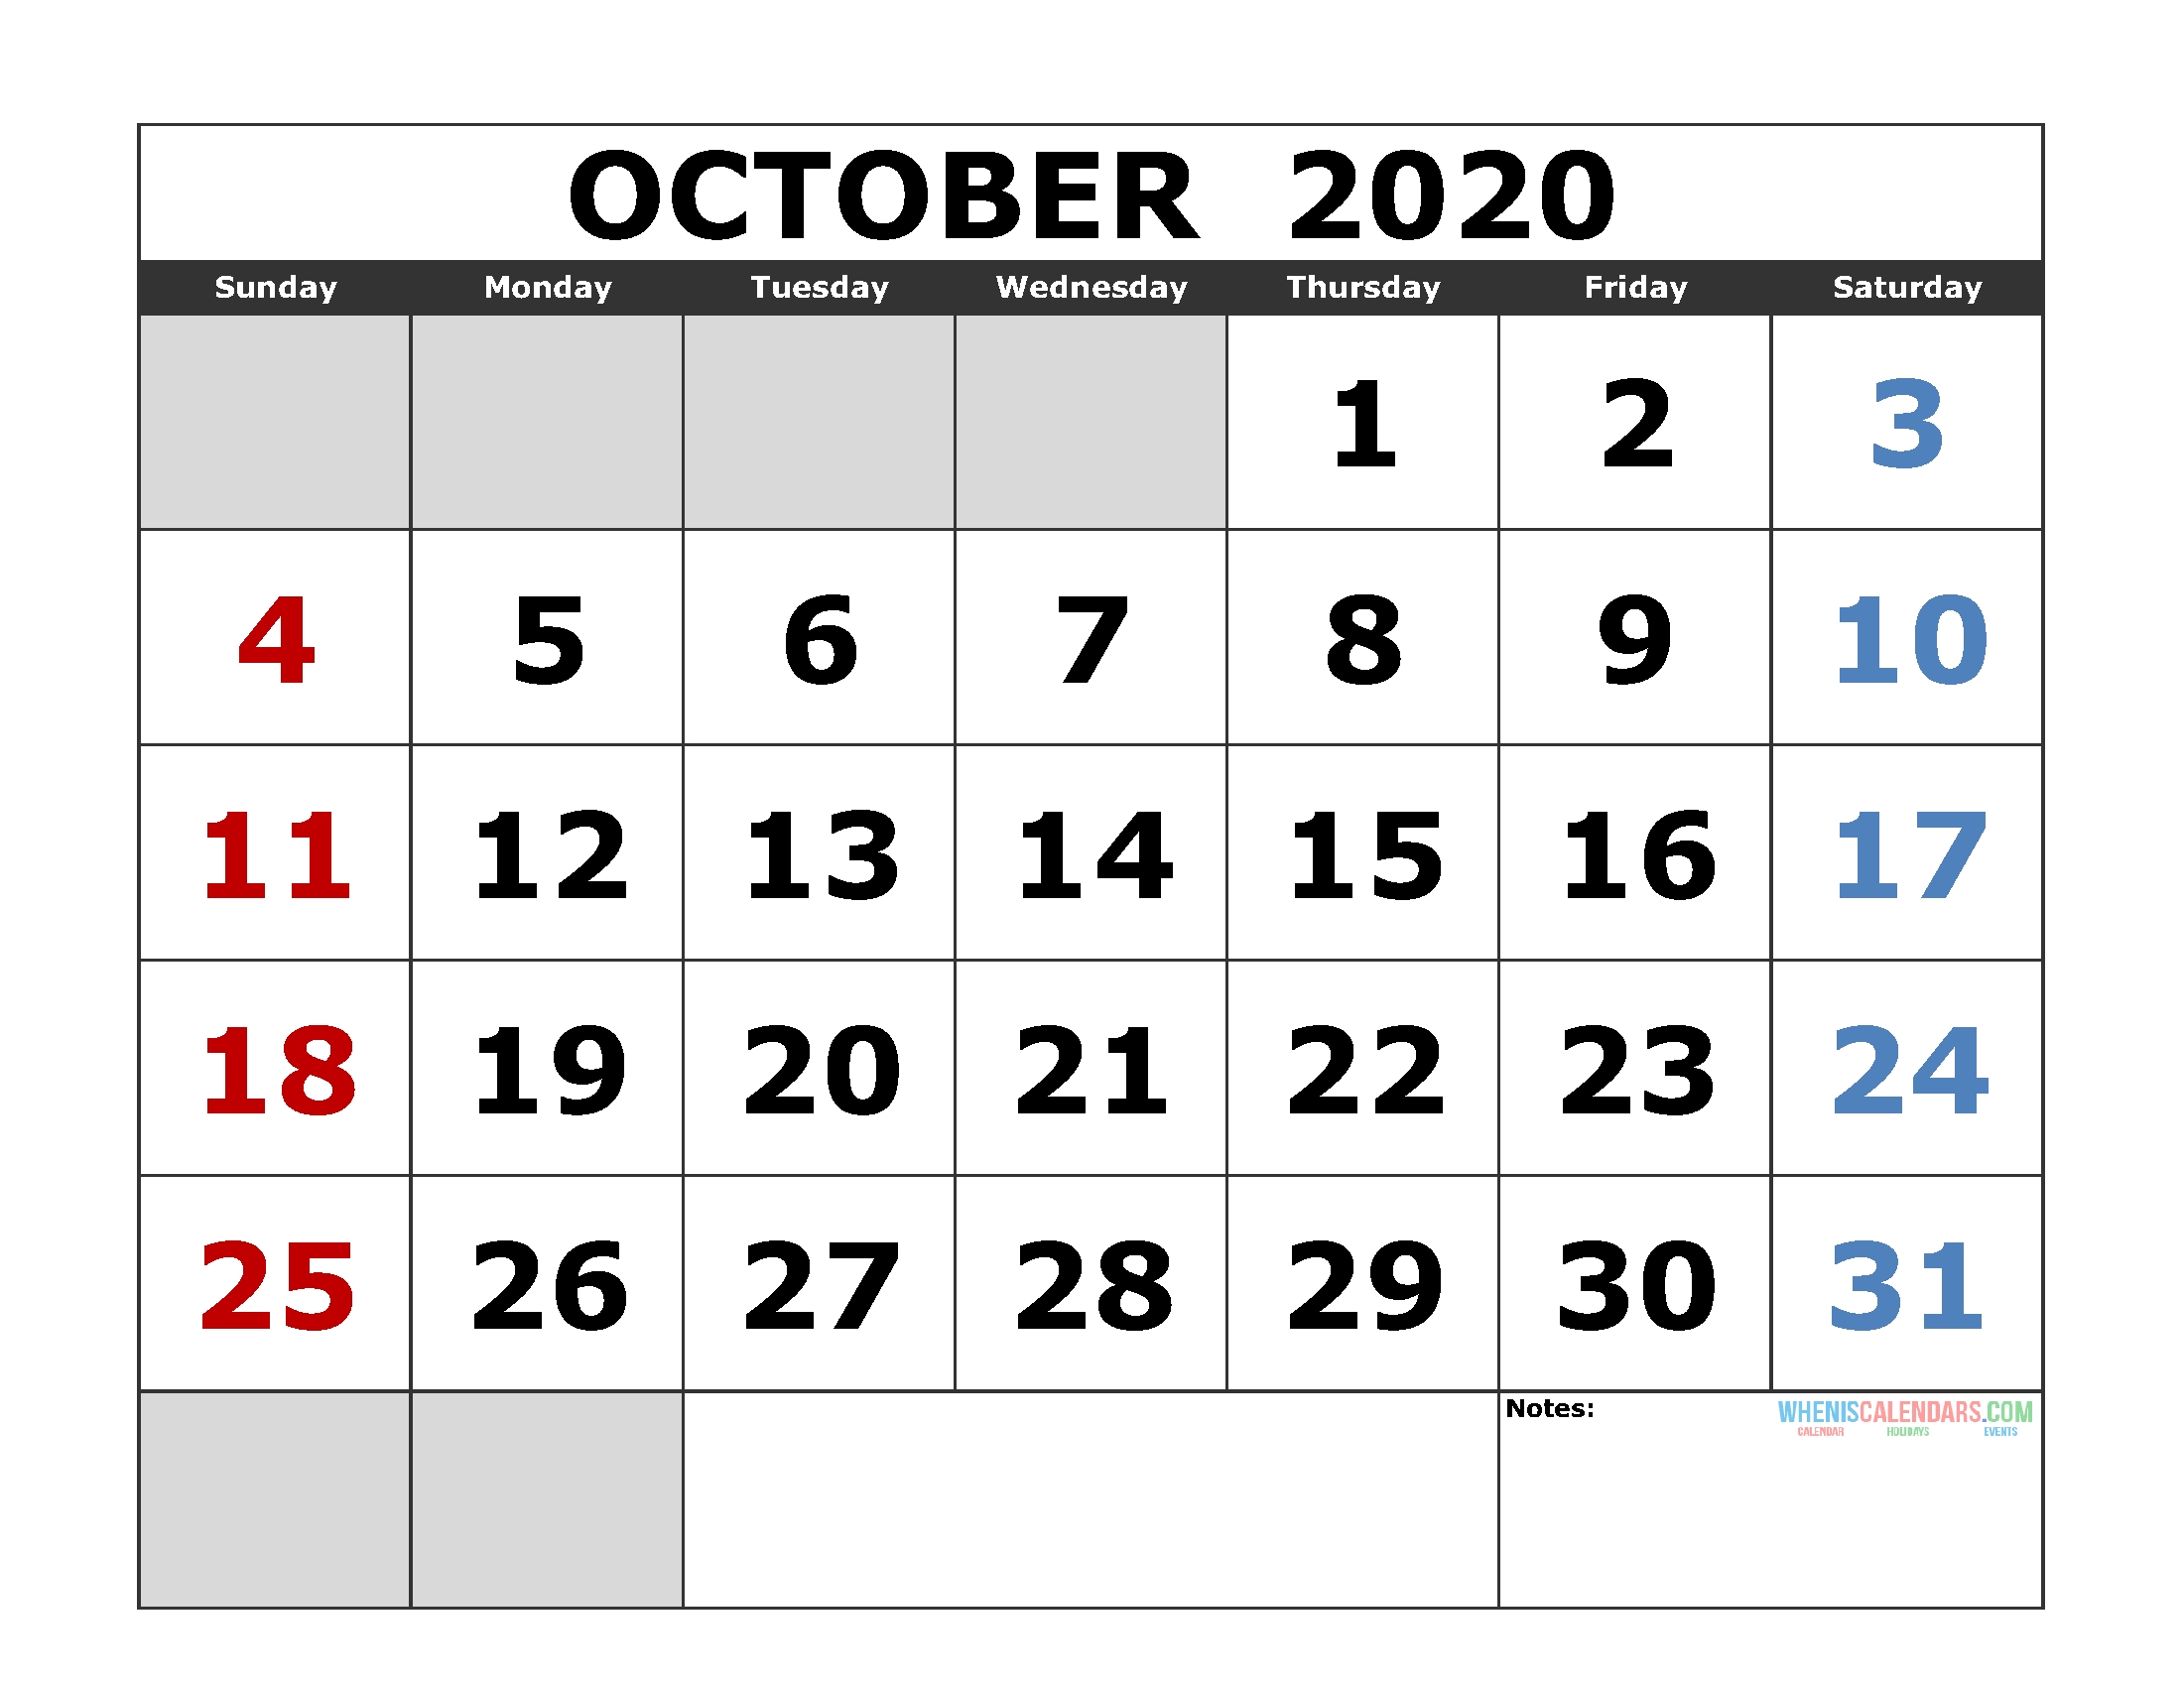 October 2020 Printable Calendar Template Excel, Pdf, Image-Calendar Of Jewish Holidays October 2020